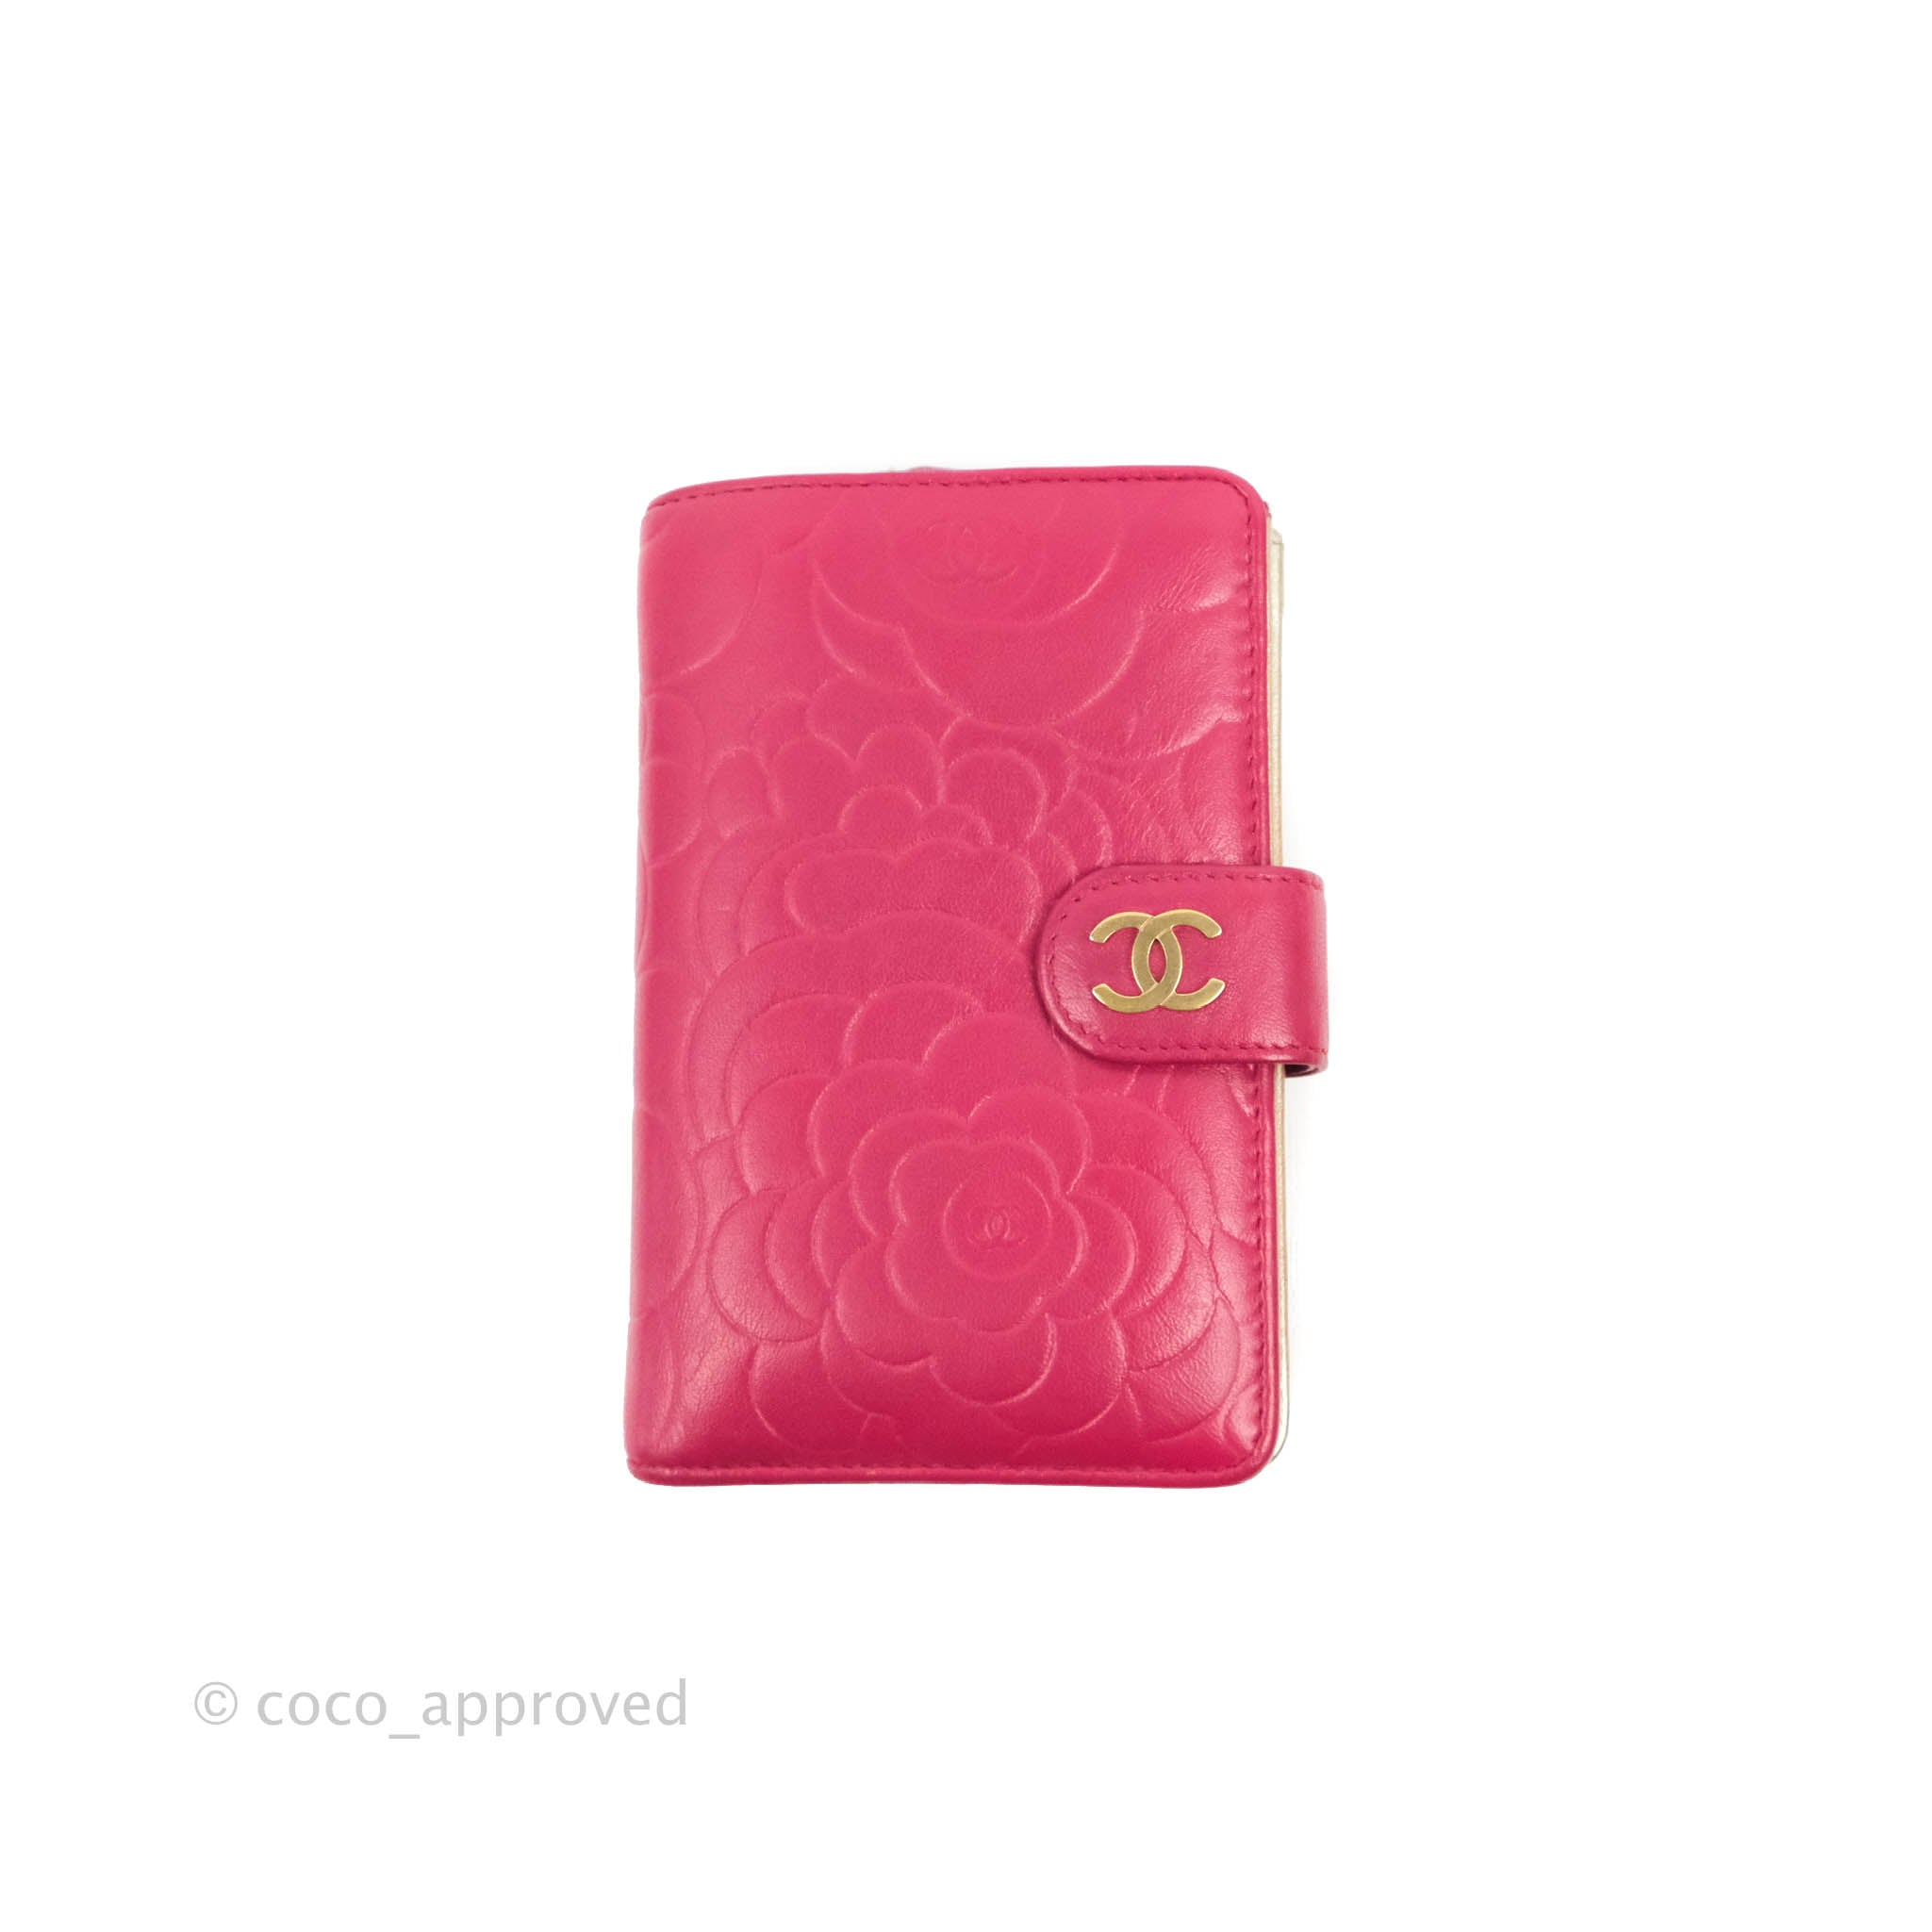 Chanel Wallet in Pink Camellia Embossed Lambskin